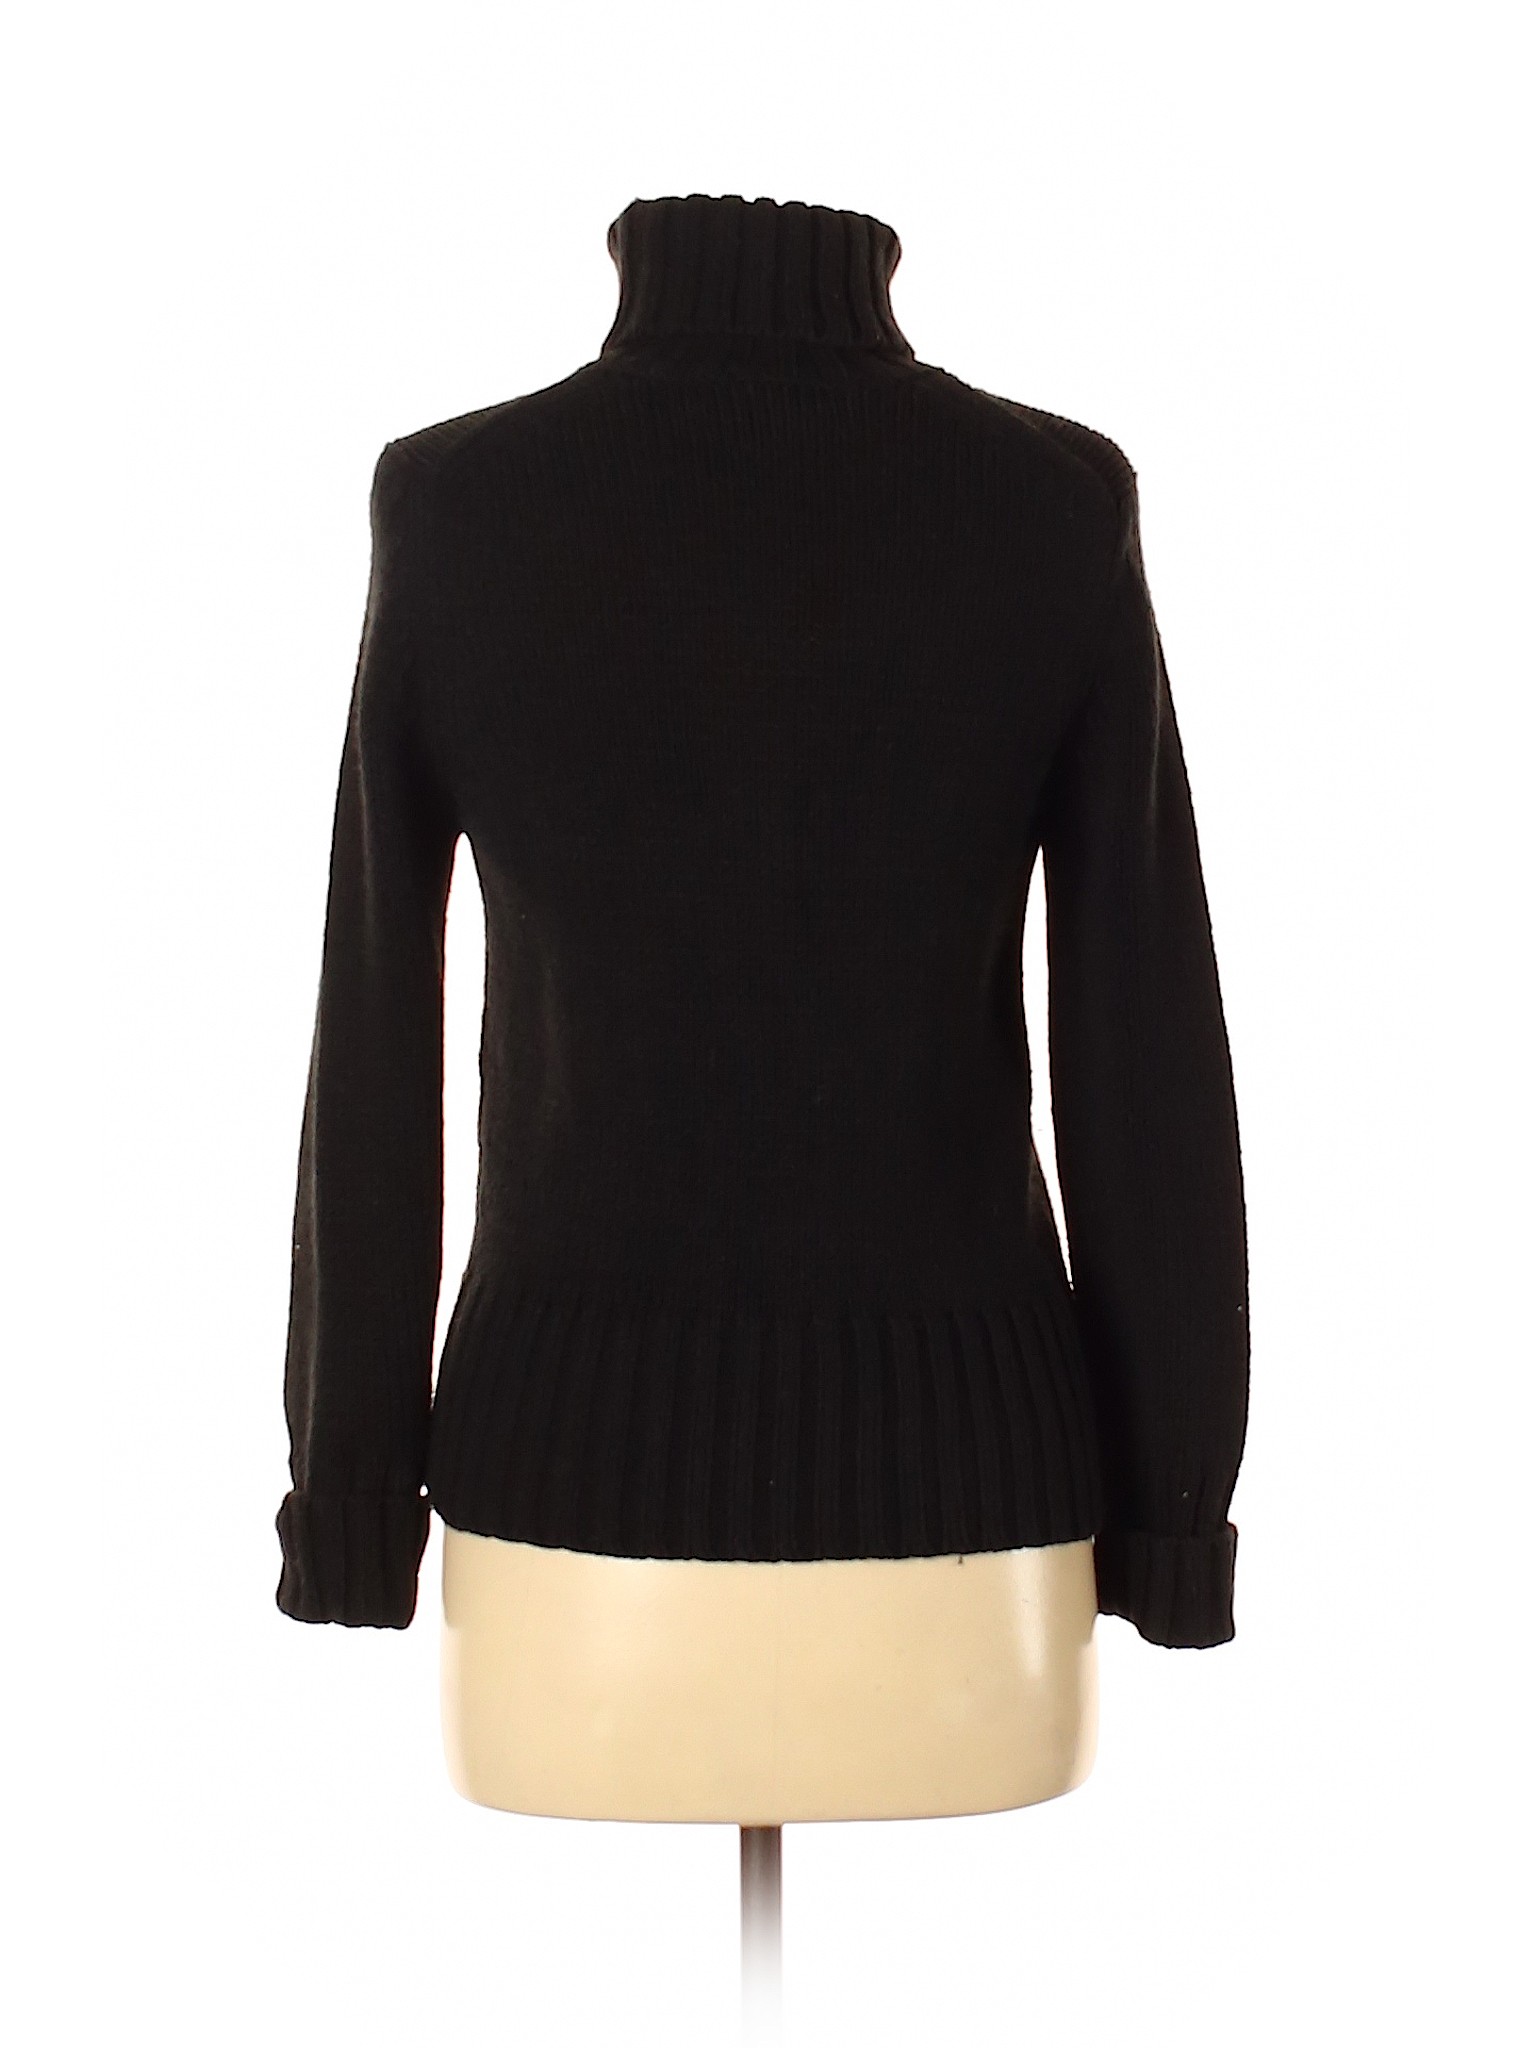 The Limited Women Black Turtleneck Sweater M | eBay